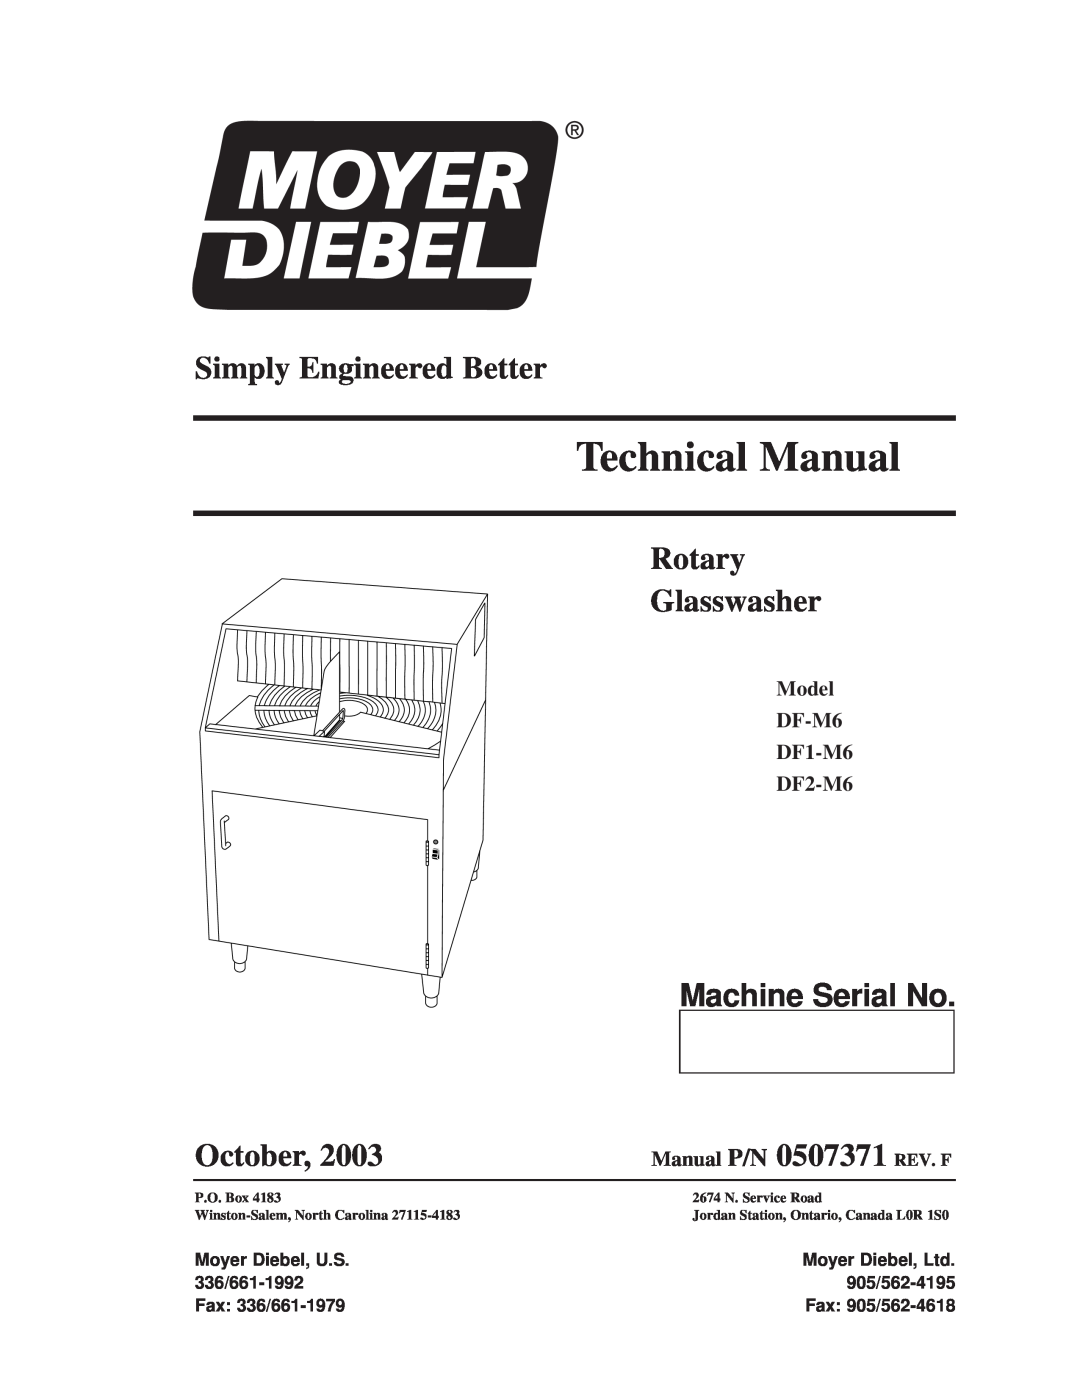 Moyer Diebel technical manual Machine Serial No, Model DF-M6 DF1-M6 DF2-M6, Technical Manual, Simply Engineered Better 